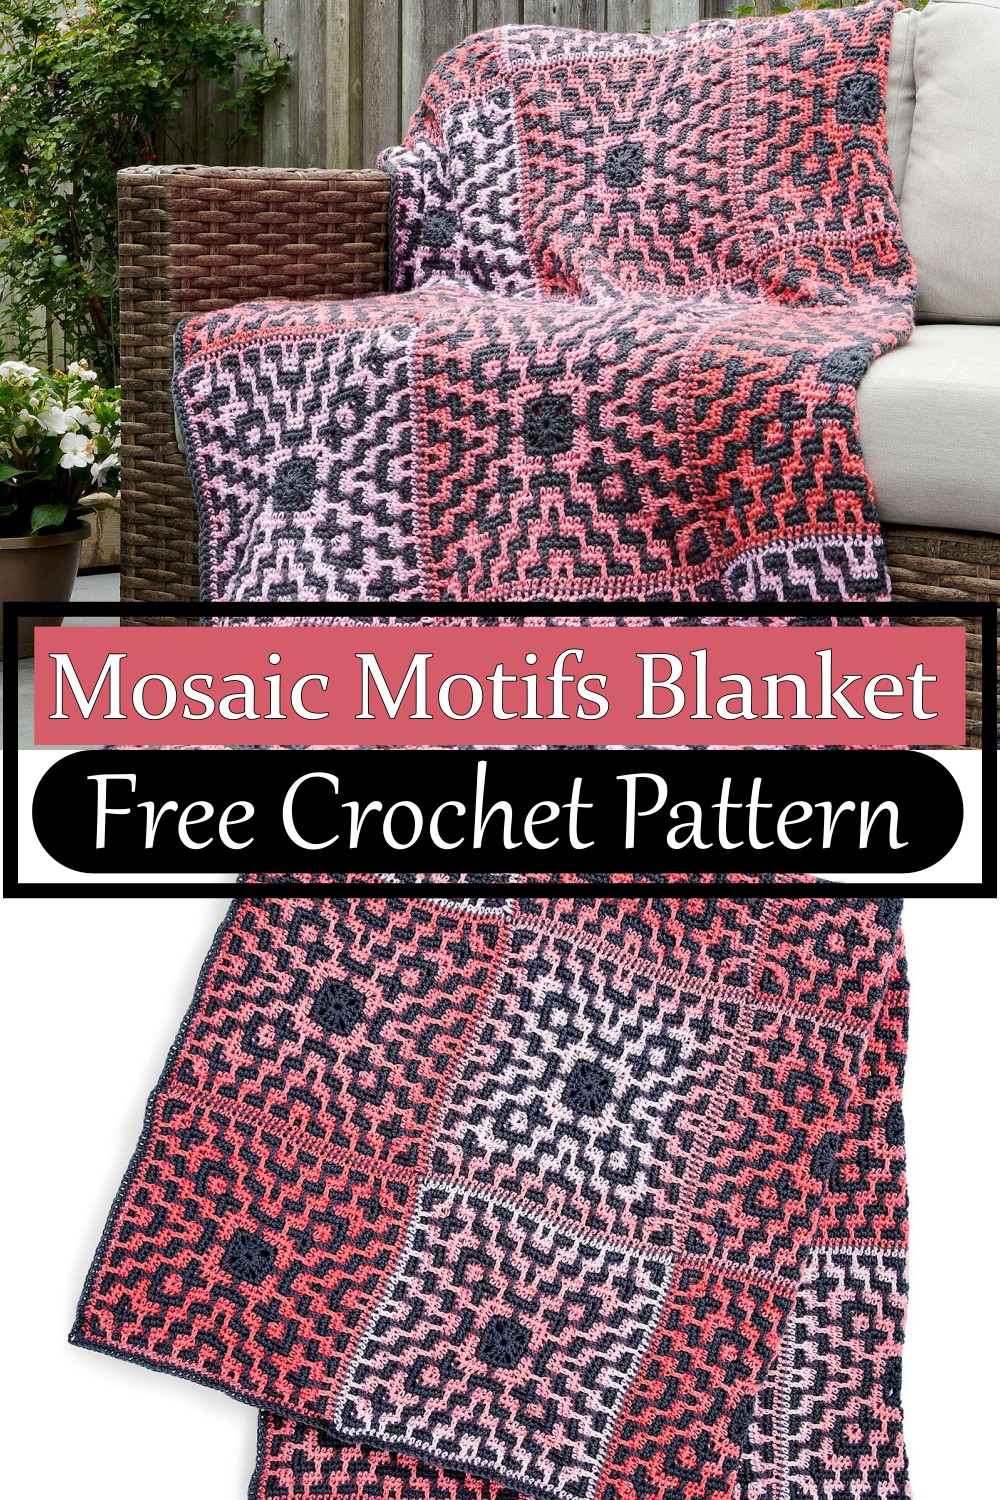 Mosaic Motifs Blanket